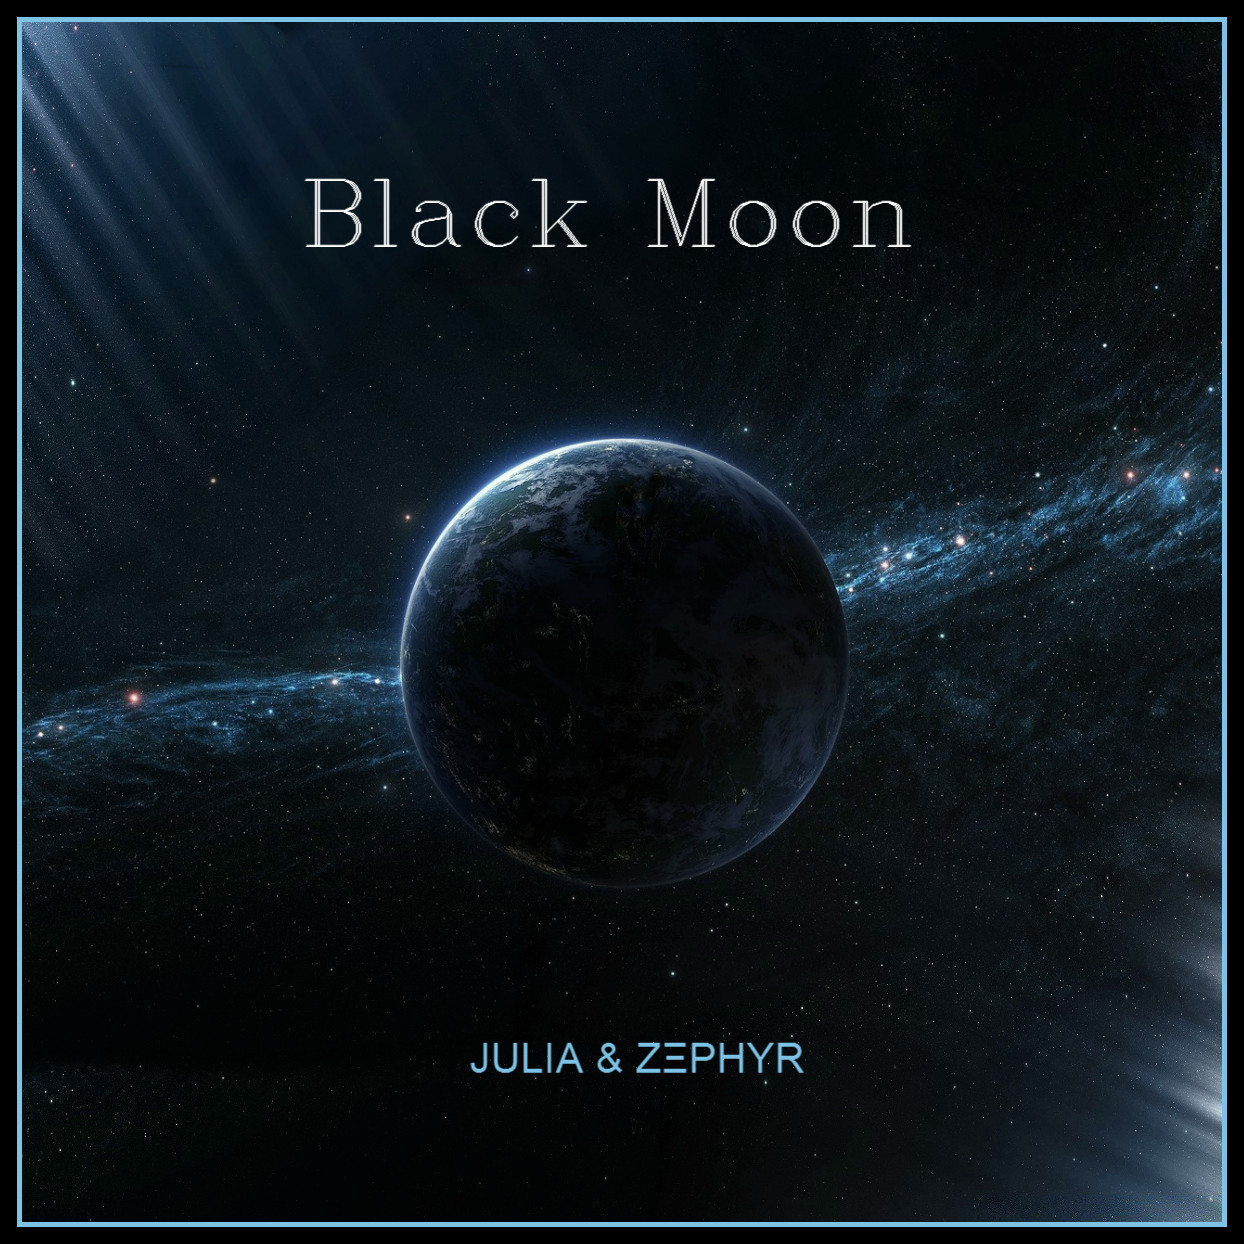 Black moon s. Блэк Мун. Слоган про луну. Black Moon 137.